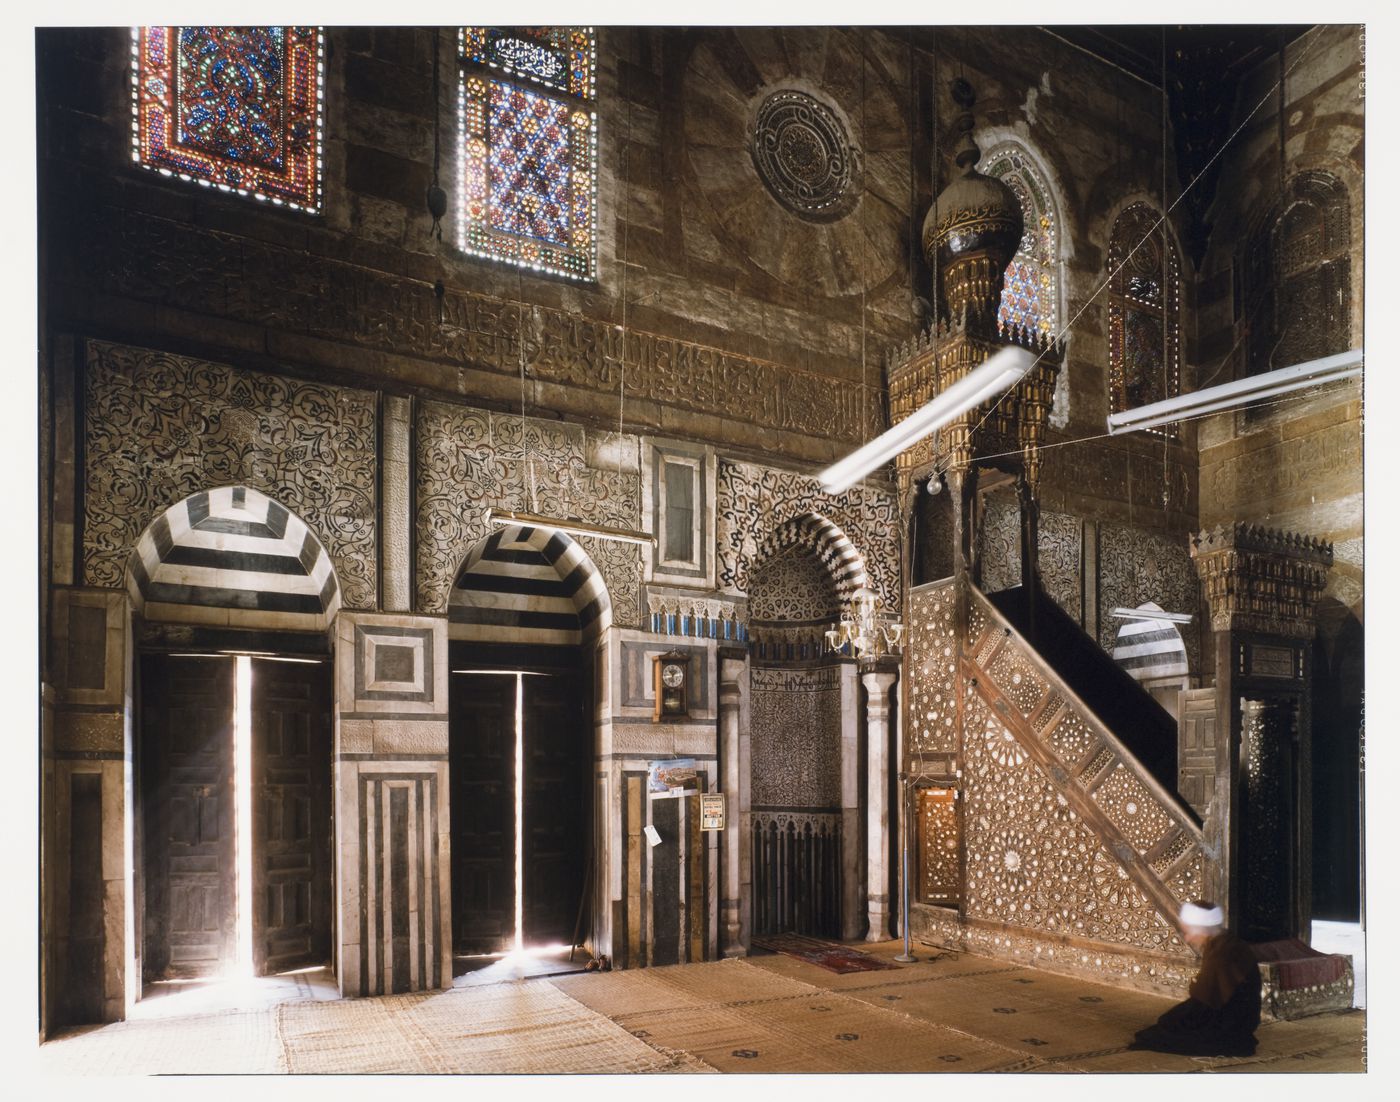 Mosque of Qijmas al Ishaqi, interior view showing entrance door, mihrab and minbar at right, Cairo, Egypt